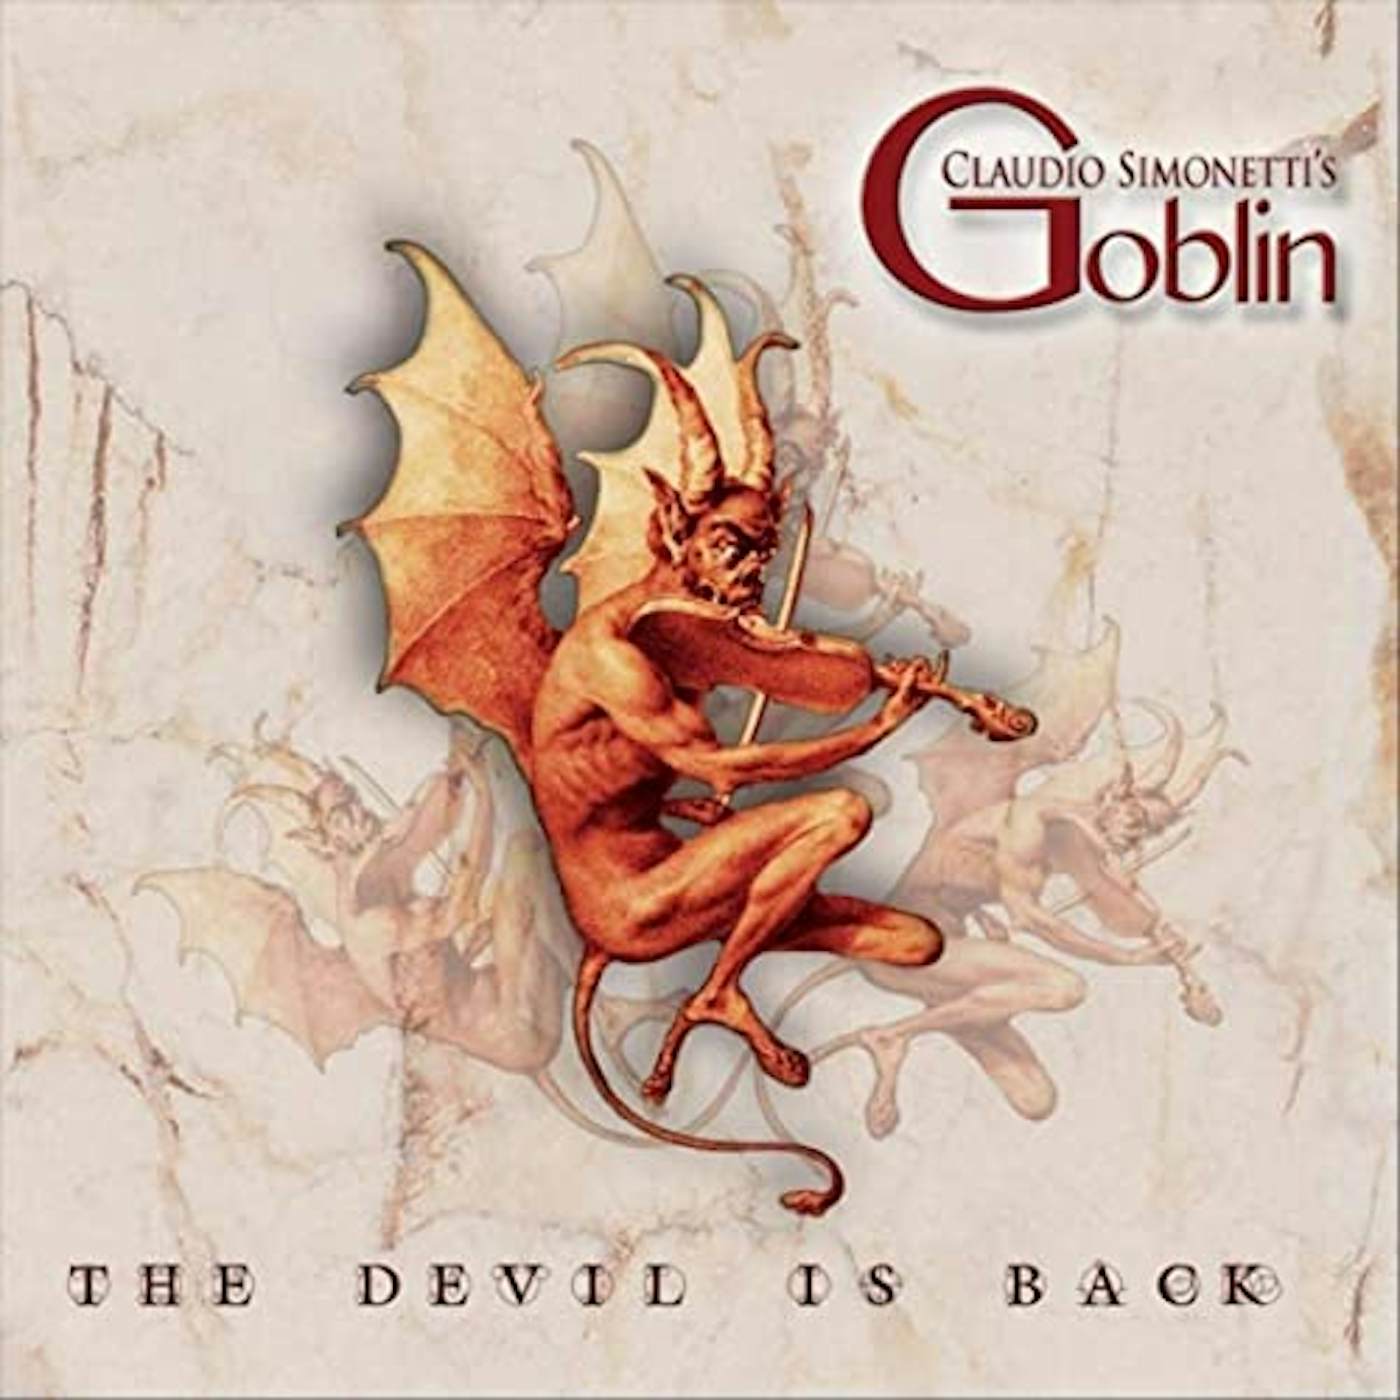 Claudio Simonetti's Goblin VERY BEST 2 Vinyl Record